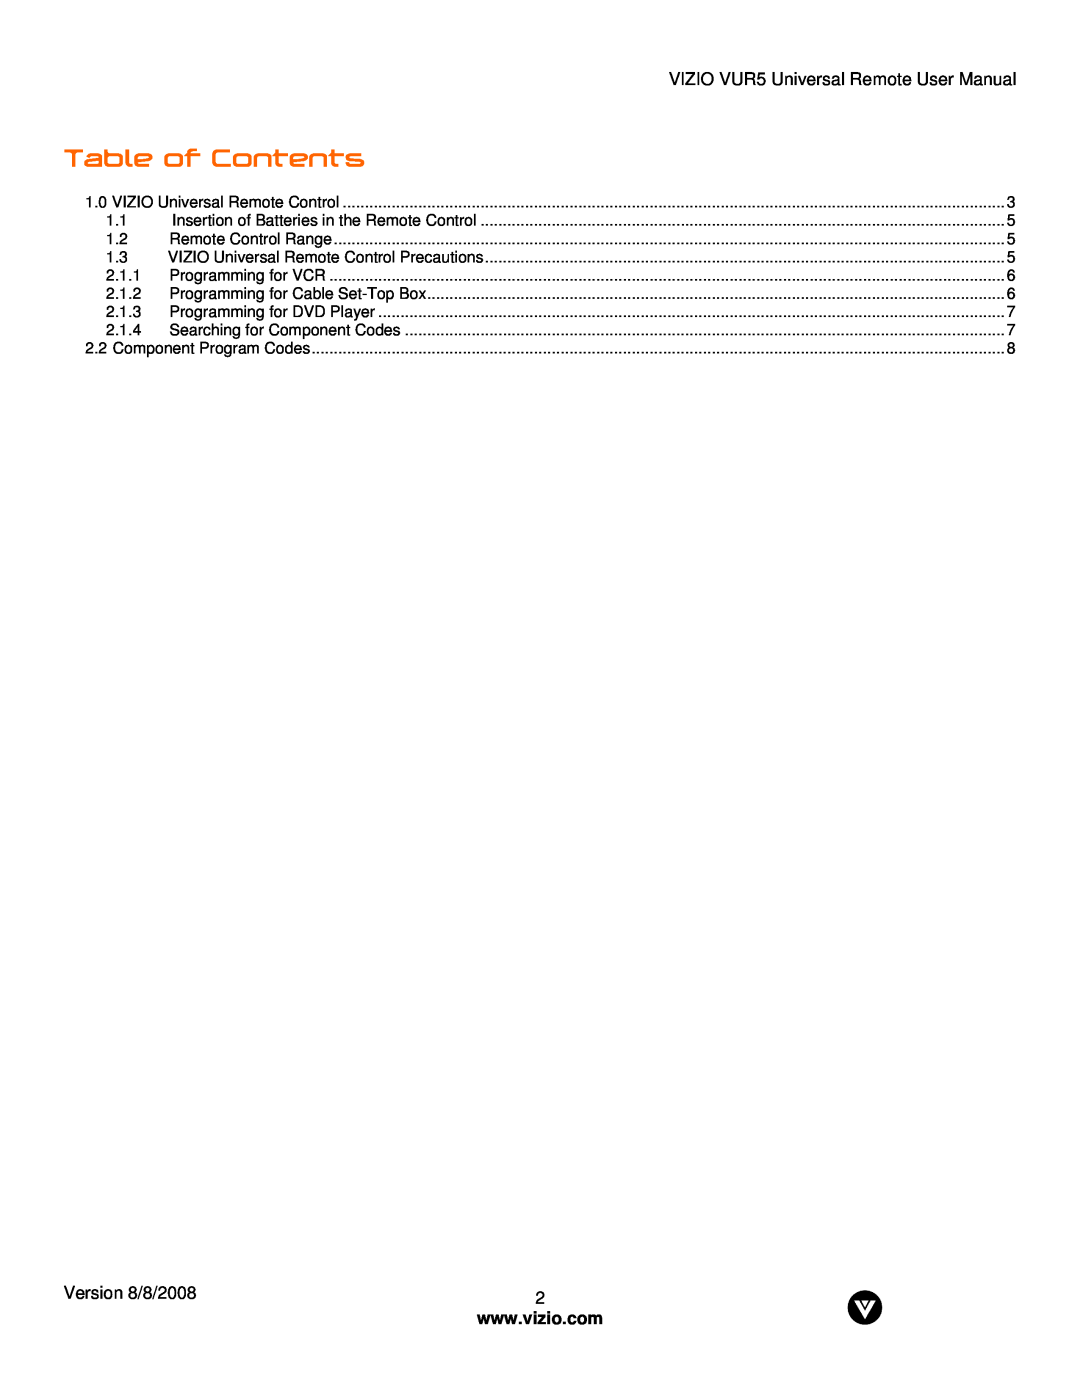 Vizio VUR5 manual Table of Contents, Version 8/8/2008 